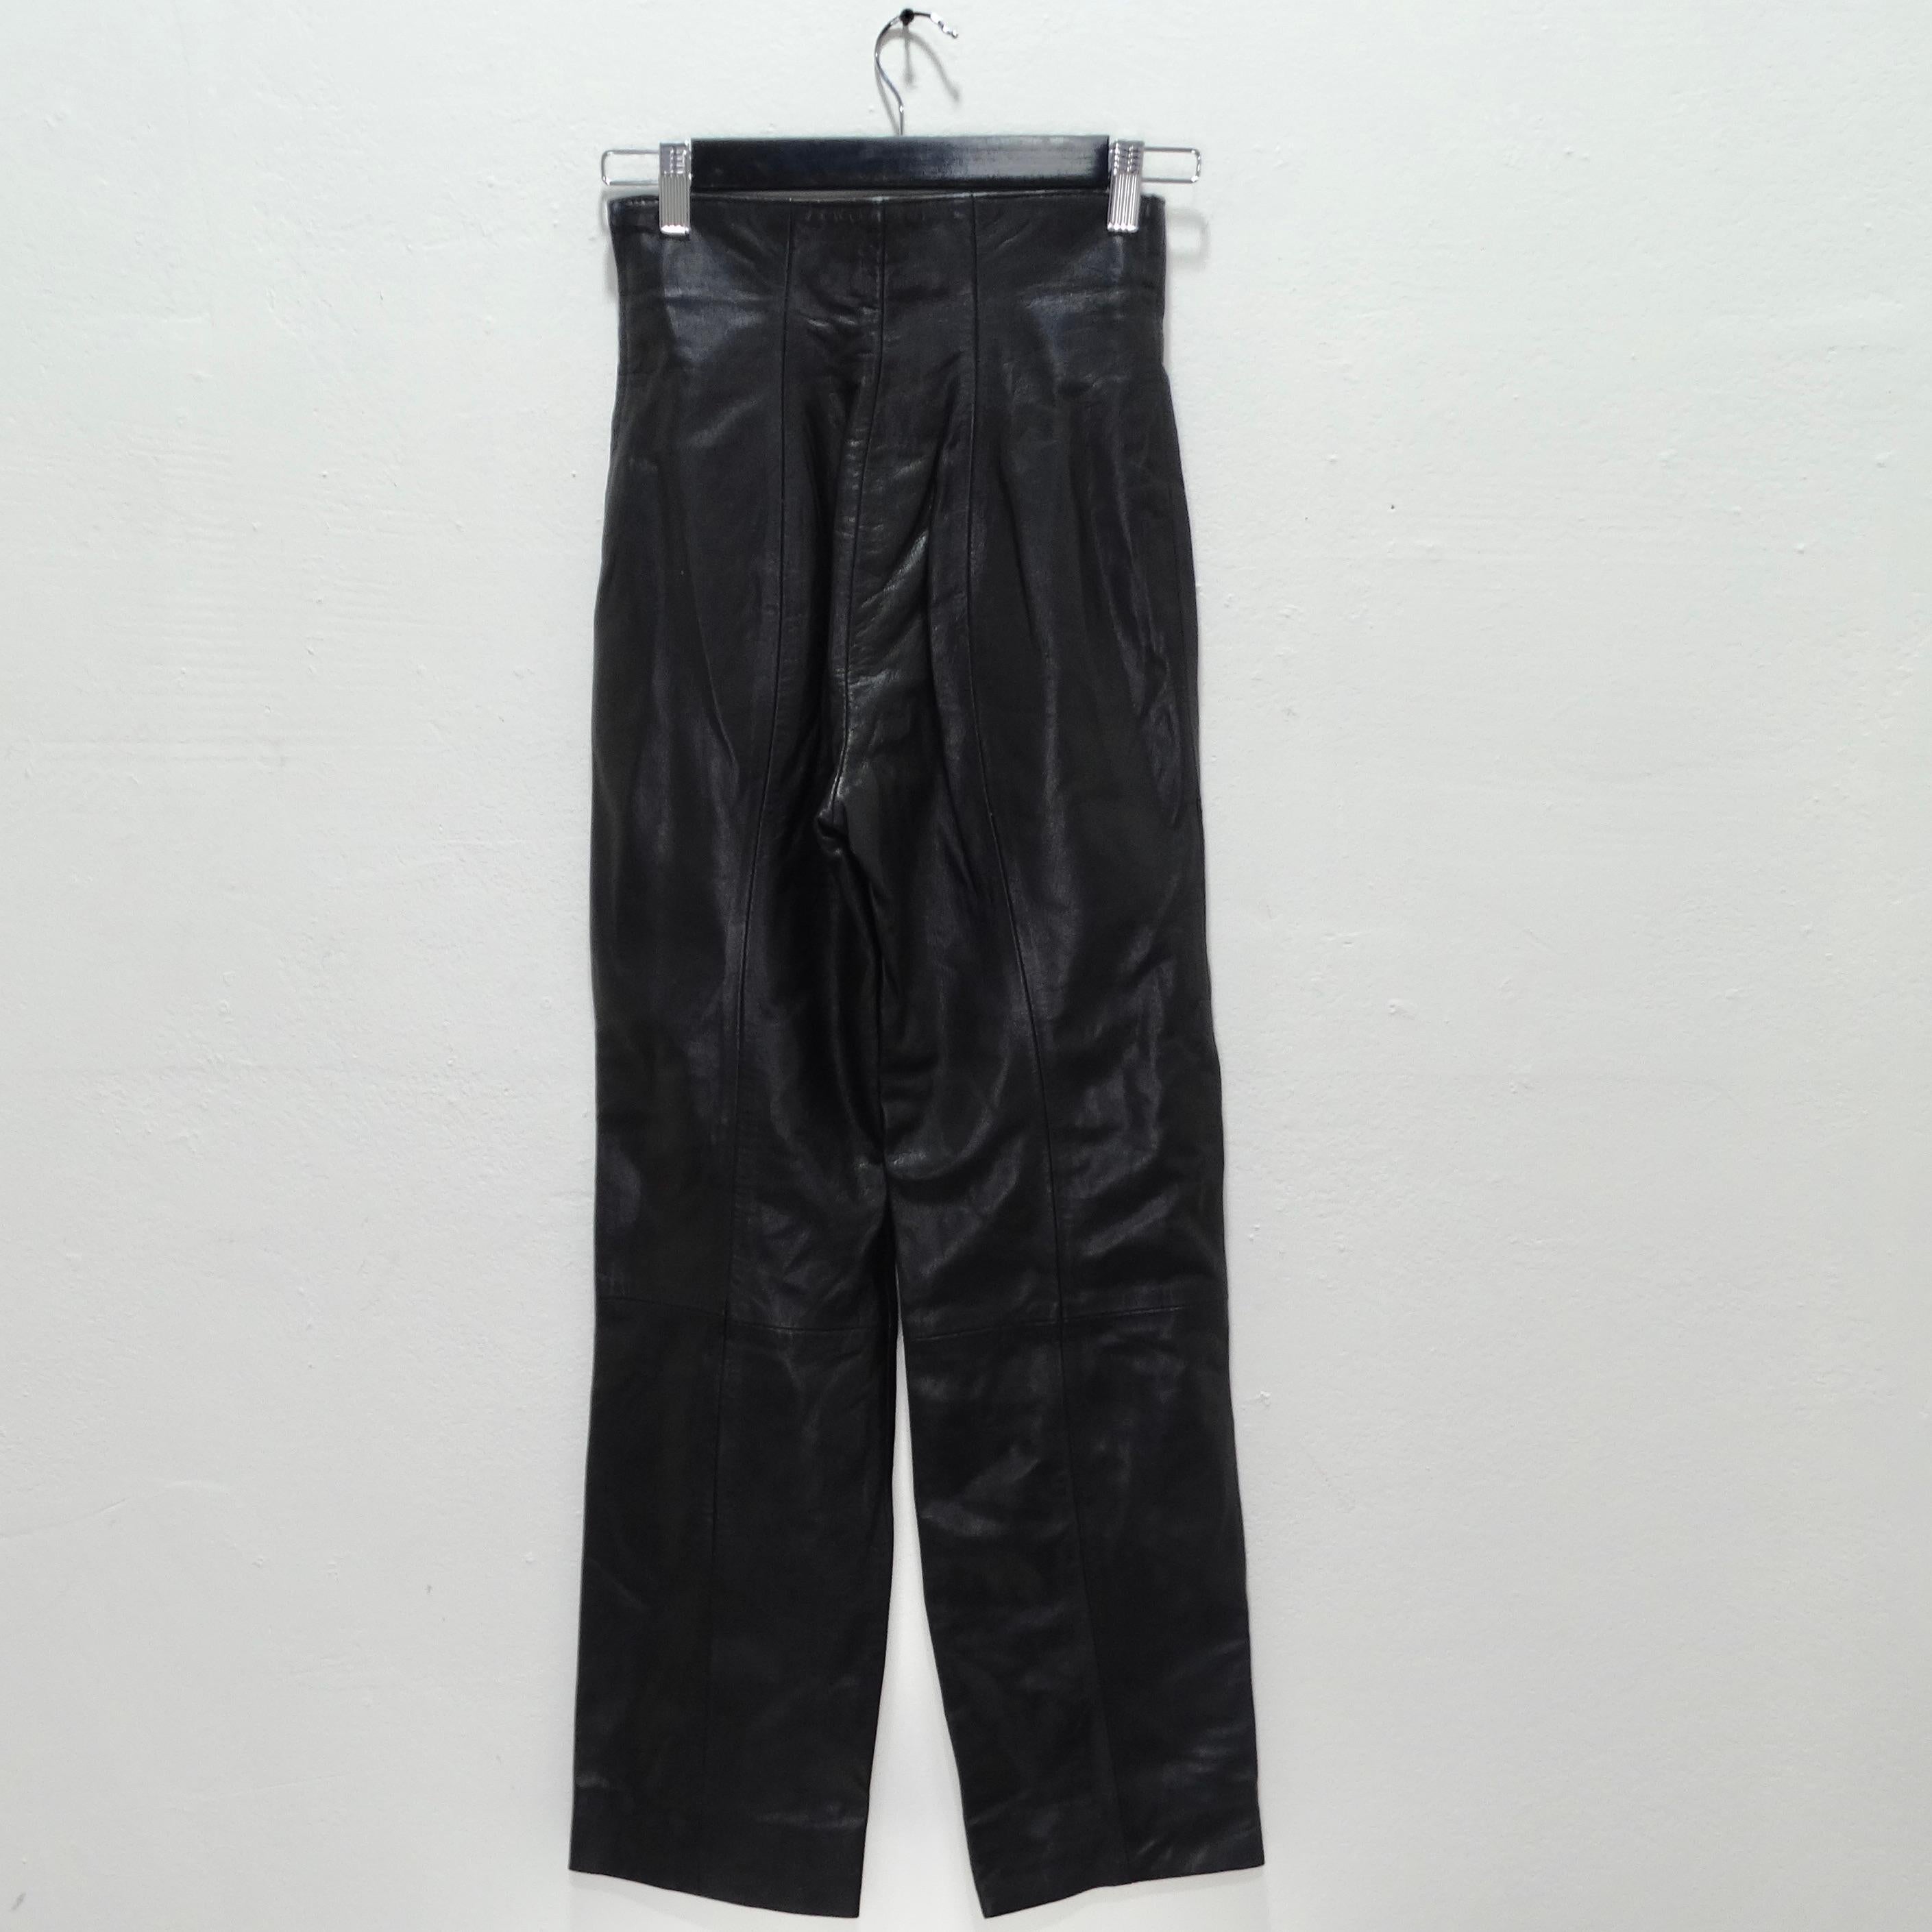 Michael Hoban 1980s Black Leather Pants For Sale 1